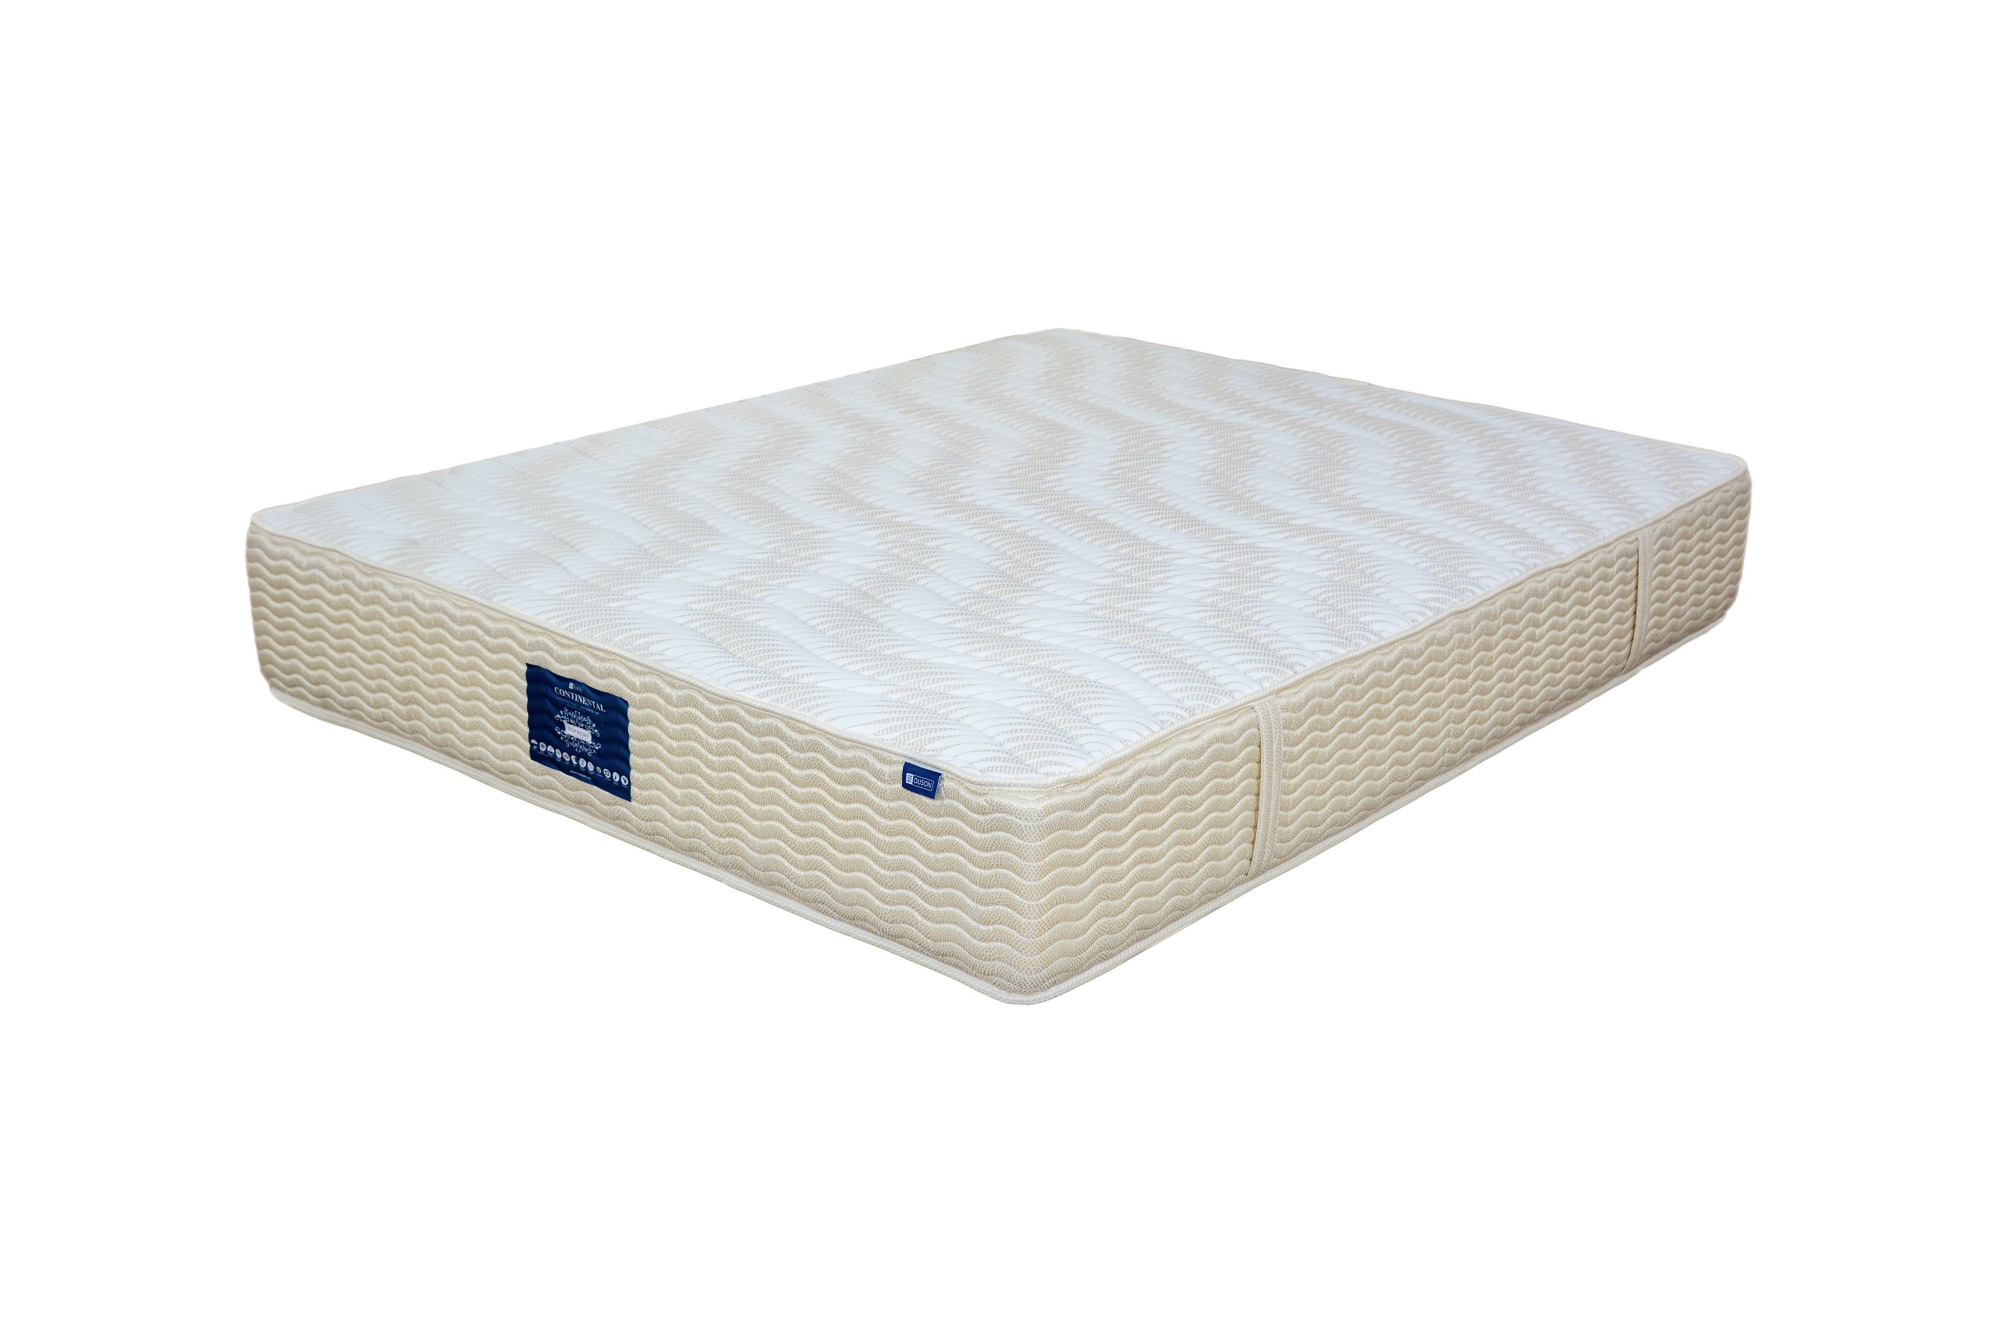 Orthopedic mattress Continental Supreme 110x200 medium, 31cm